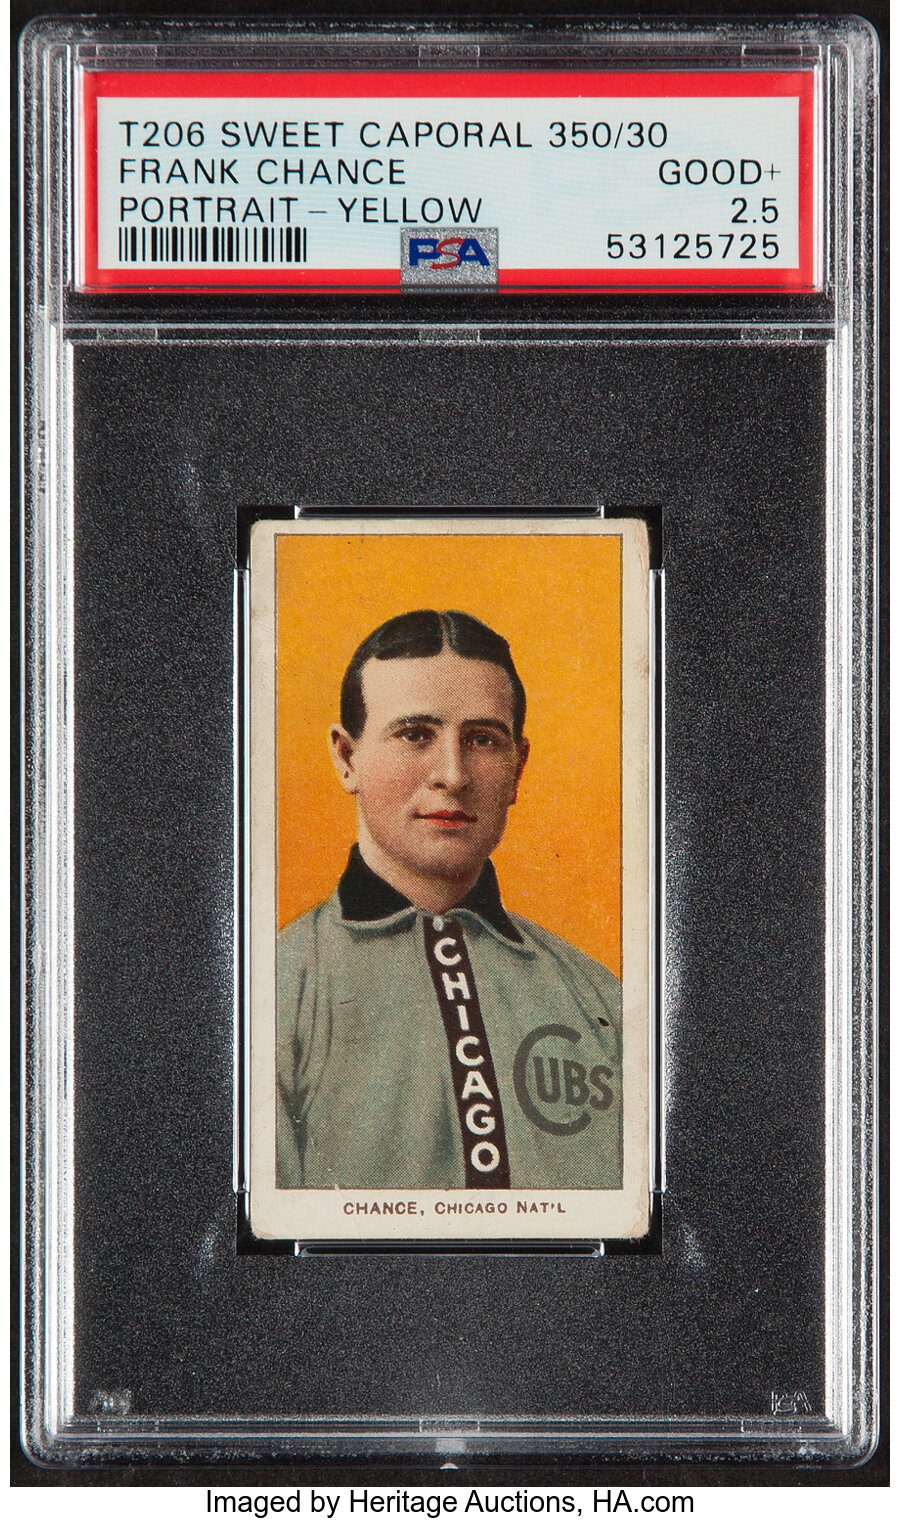 1909-11 T206 Sweet Caporal Frank Chance (Portrait-Yellow) PSA Good+ 2.5